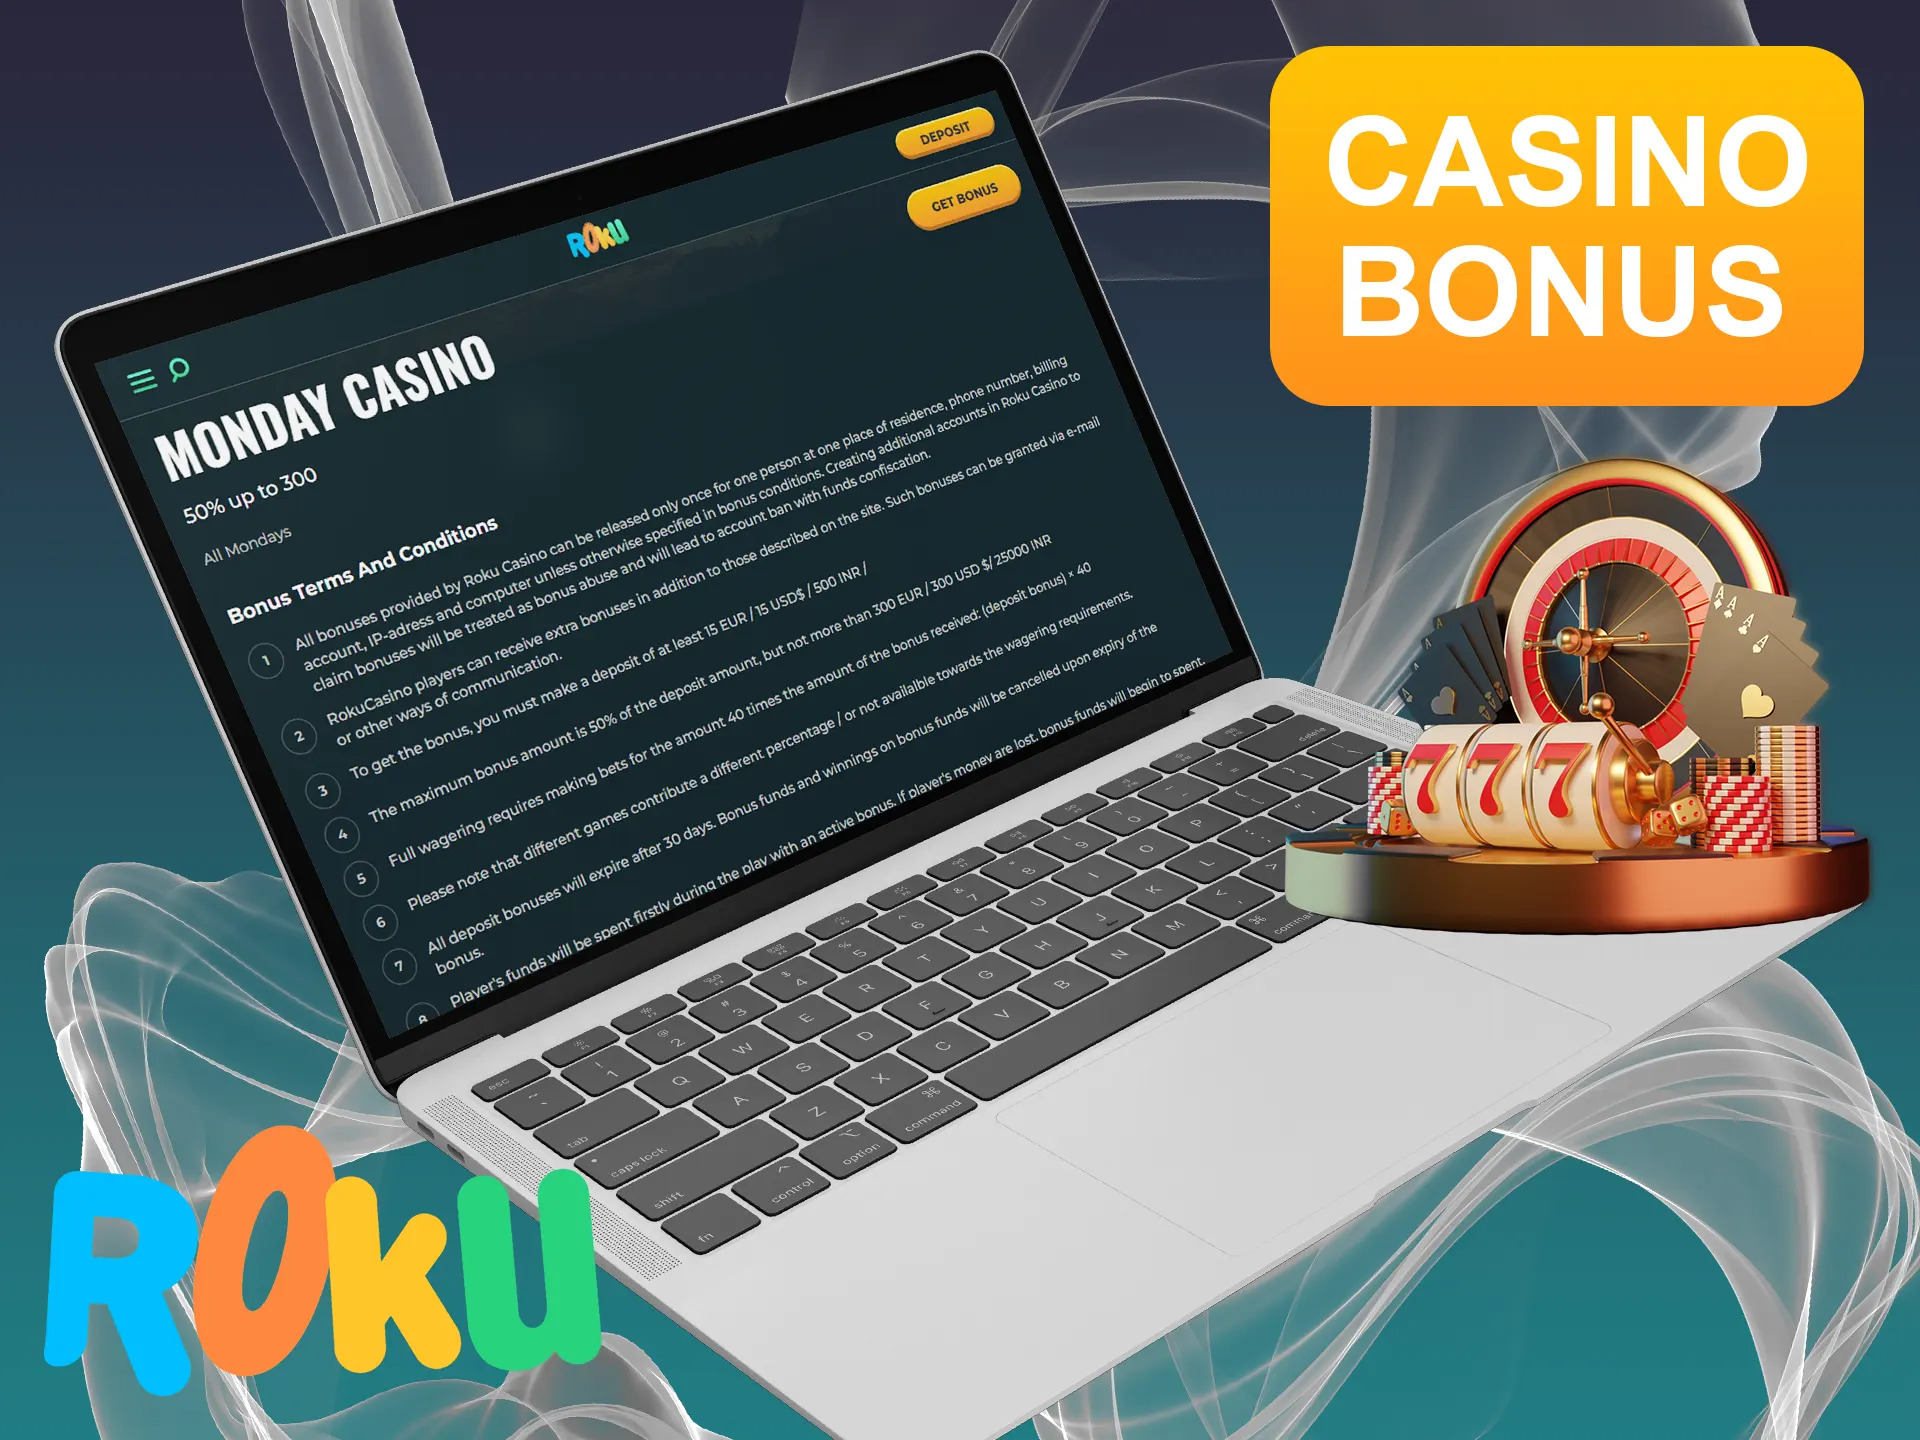 Get Rokubet casino bonus after playing casino games.